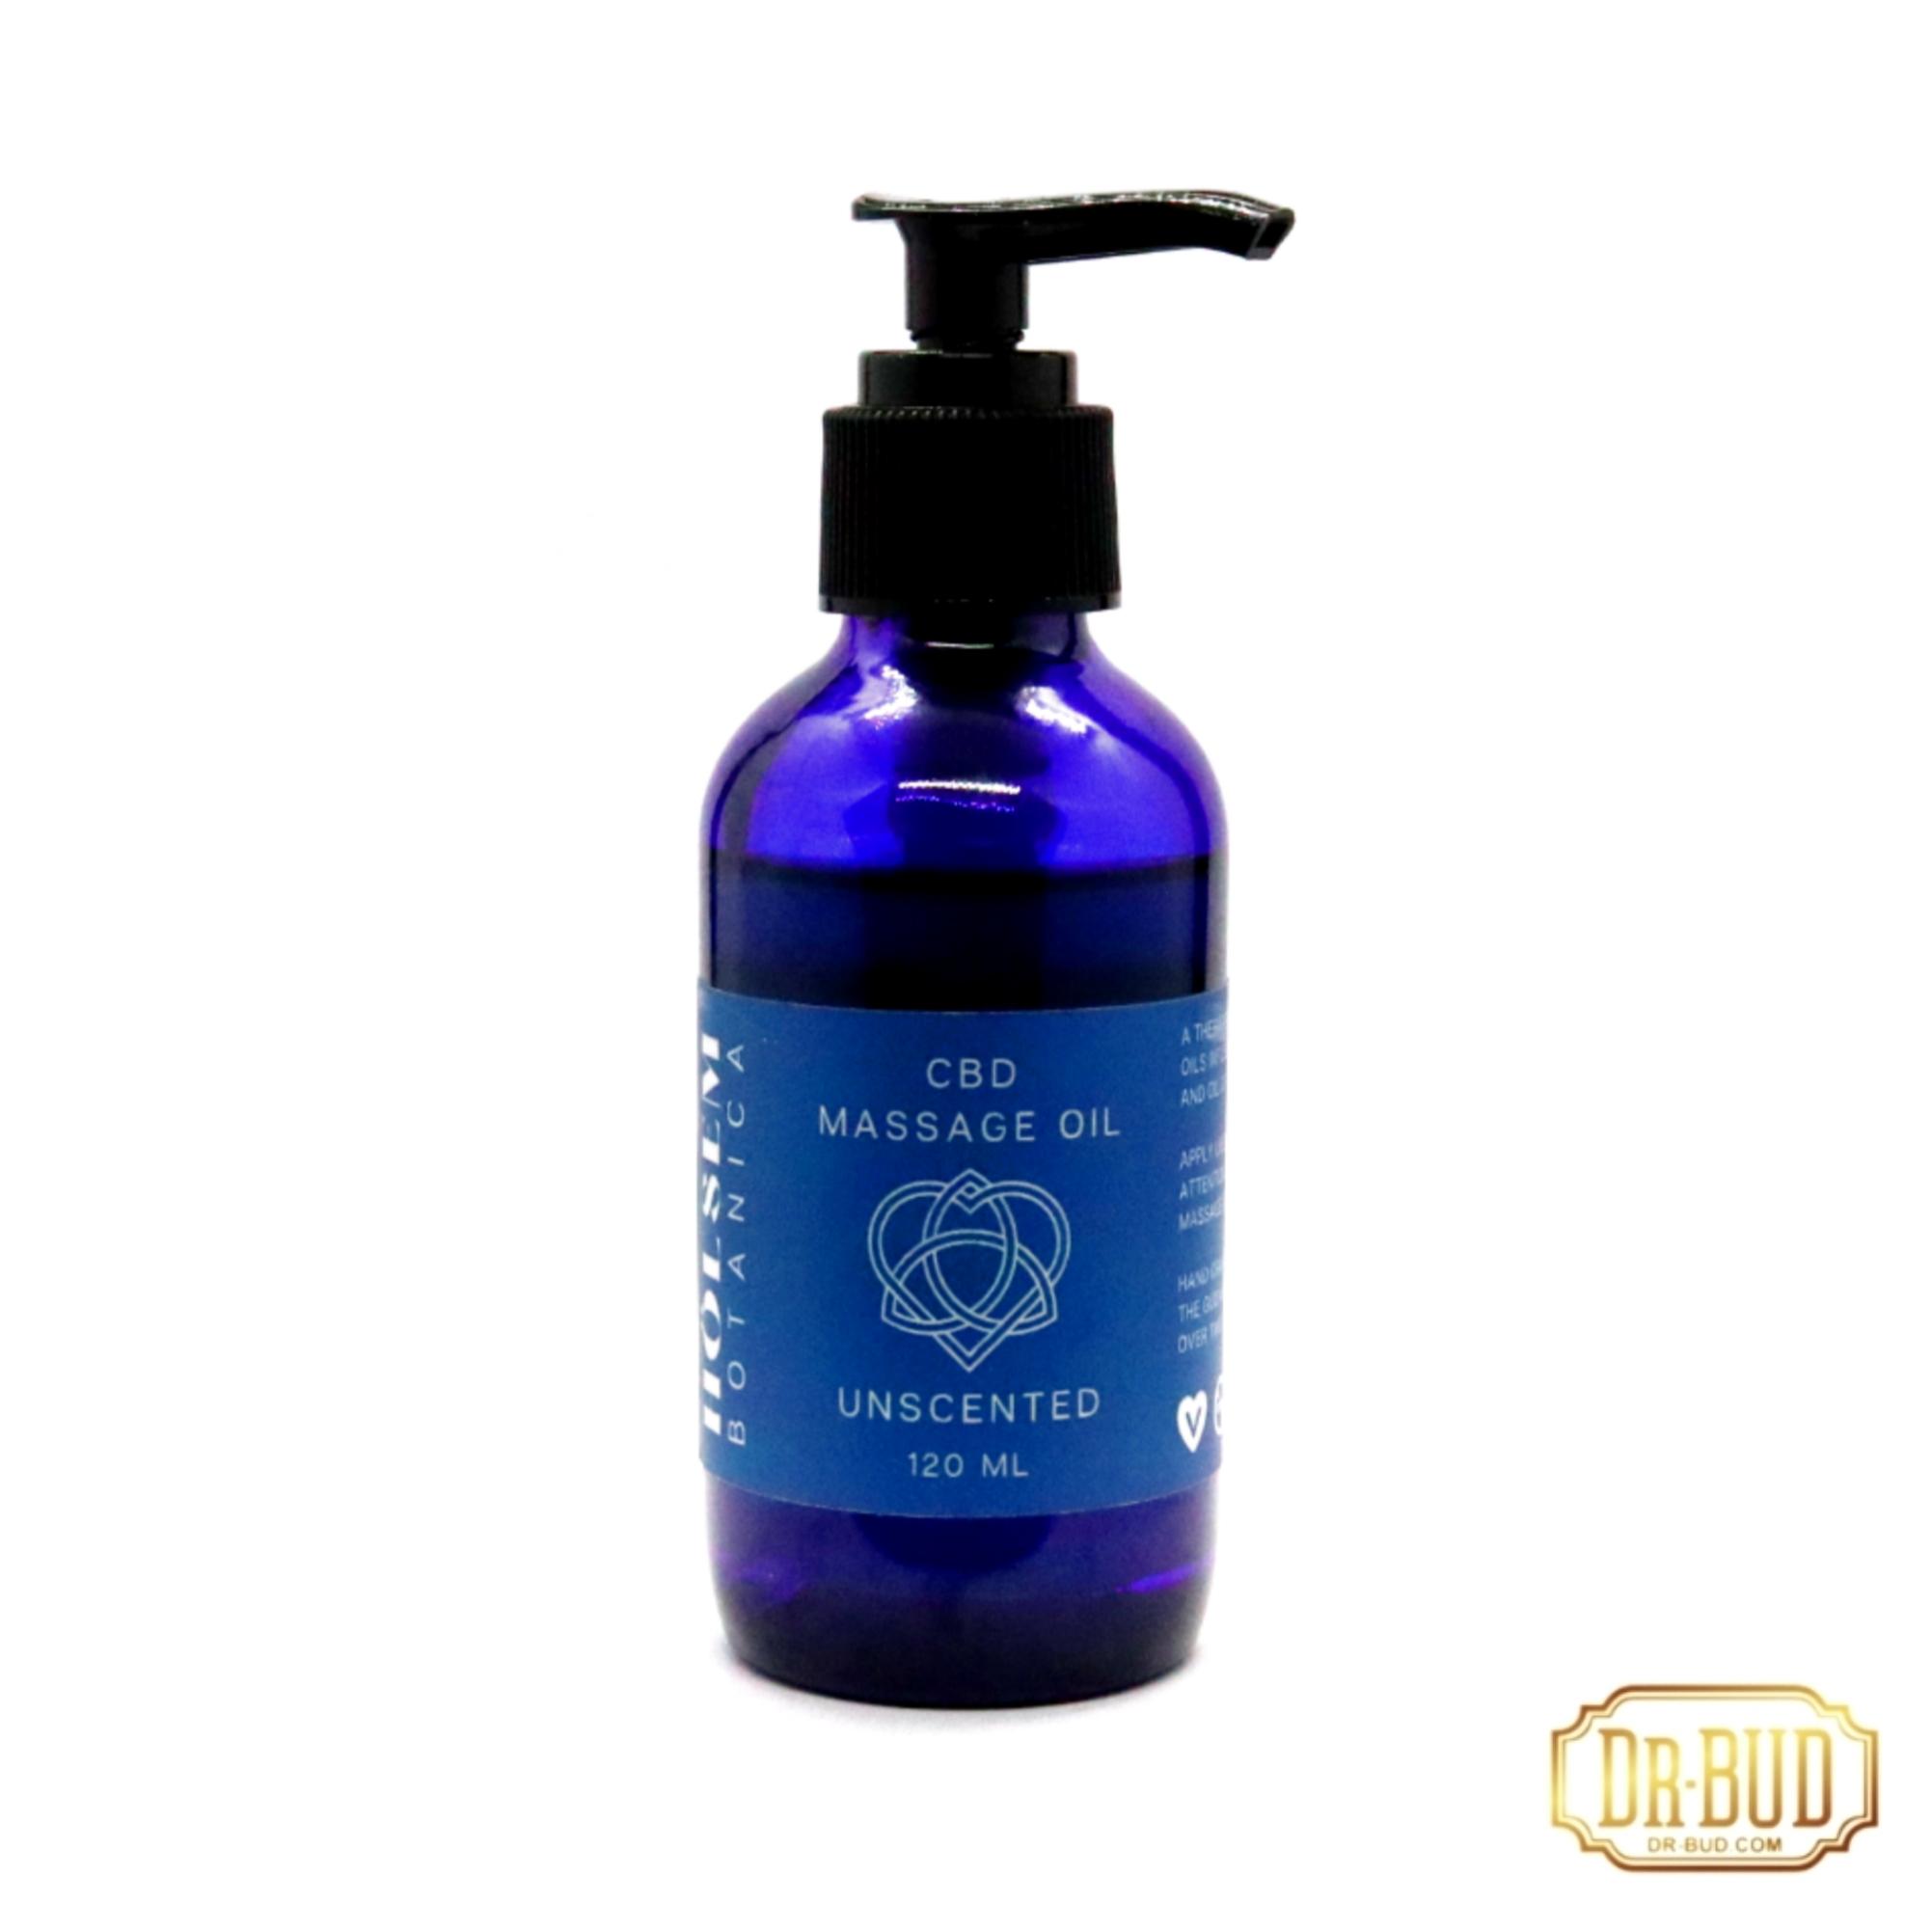 Holsem Botanica – CBD Massage Oil